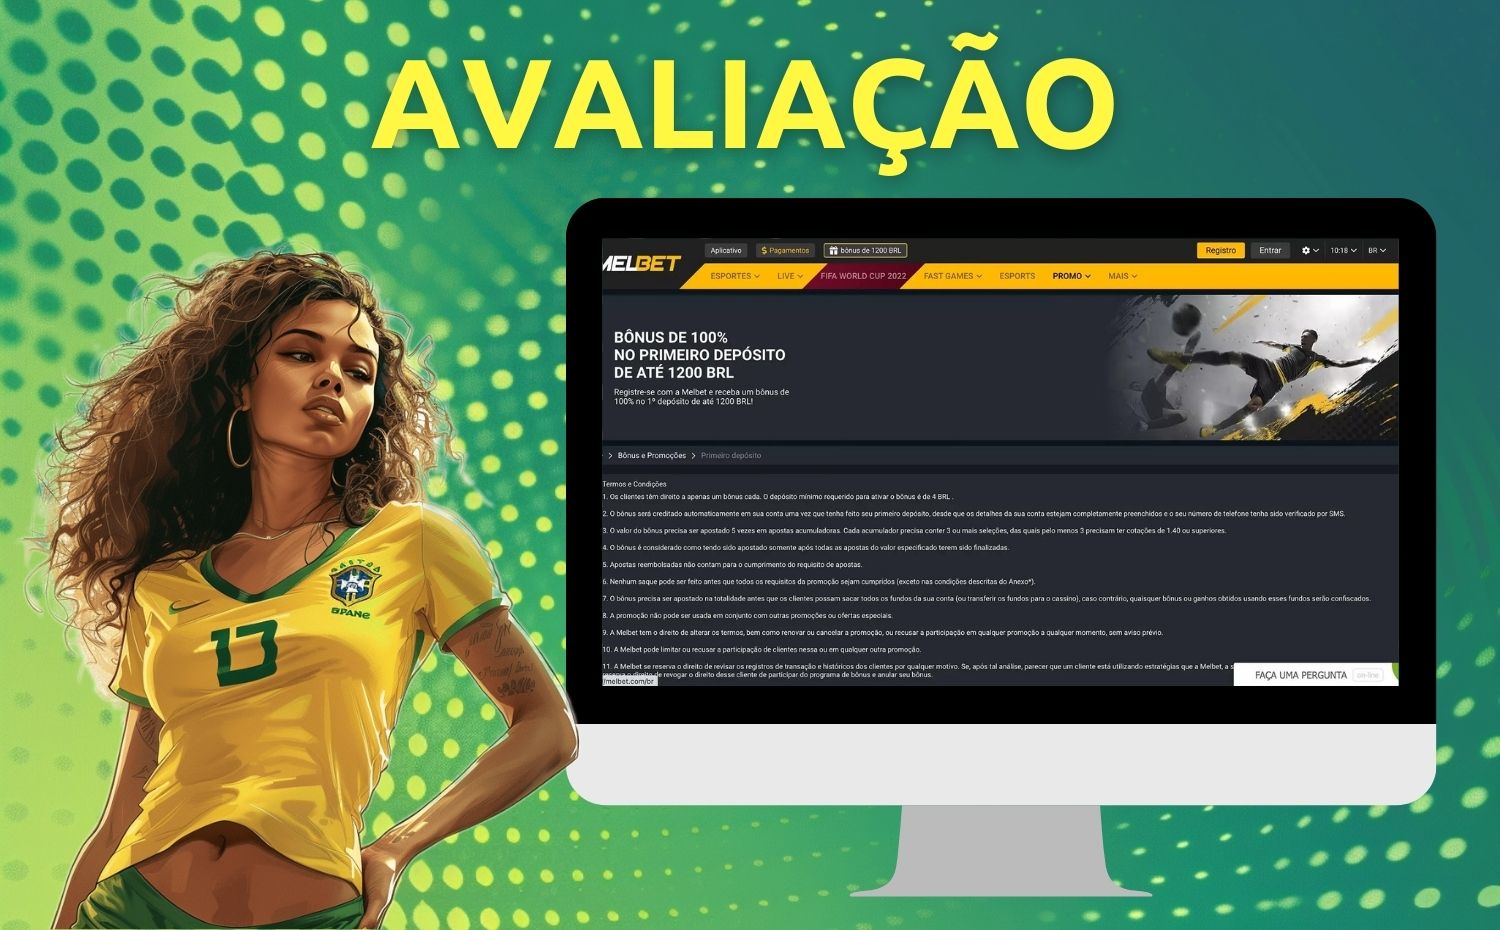 Avaliação da Melbet Brasil site guia